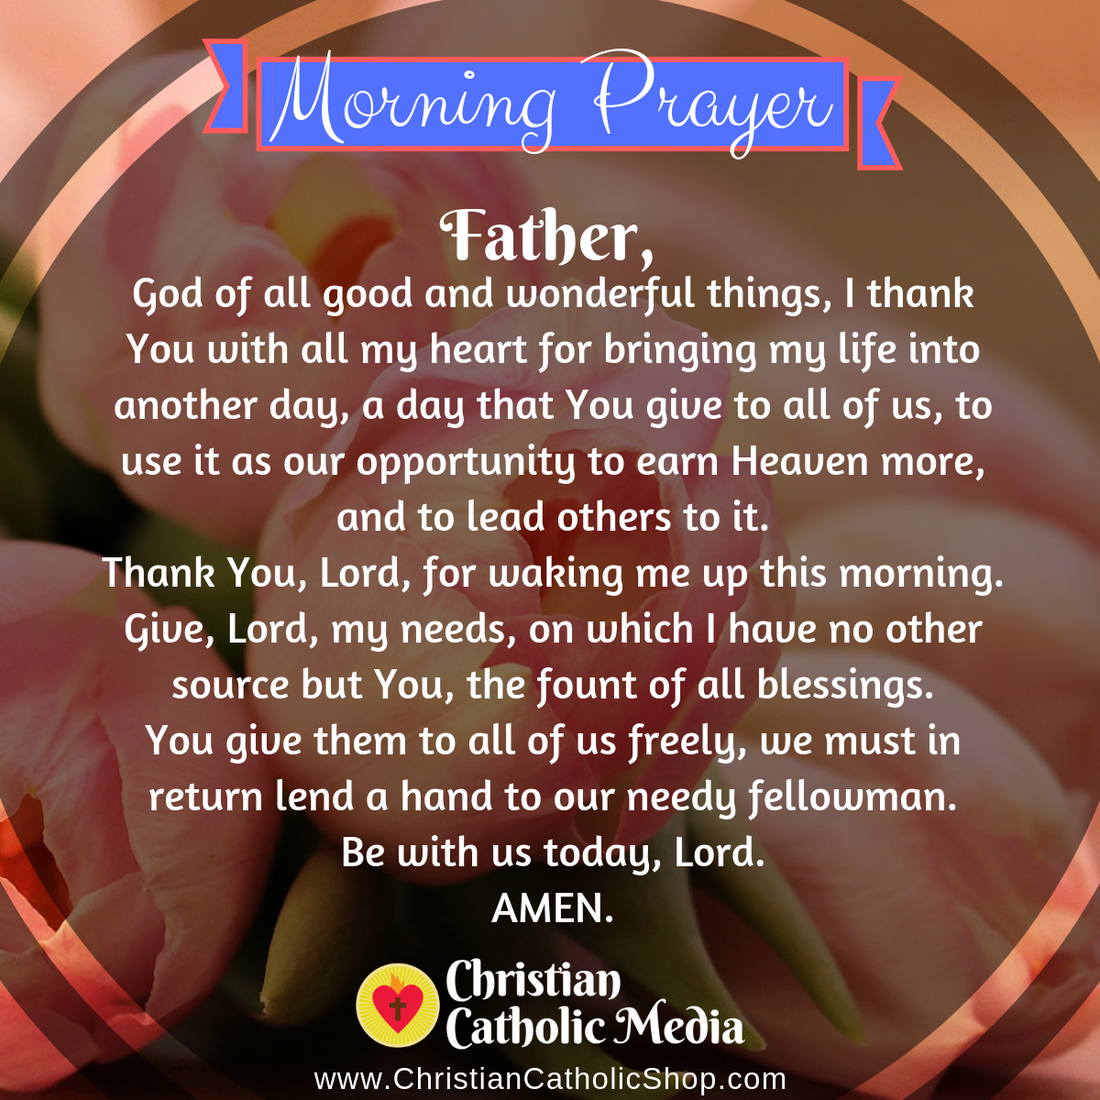 Morning Prayer Catholic Wednesday 5-27-2020